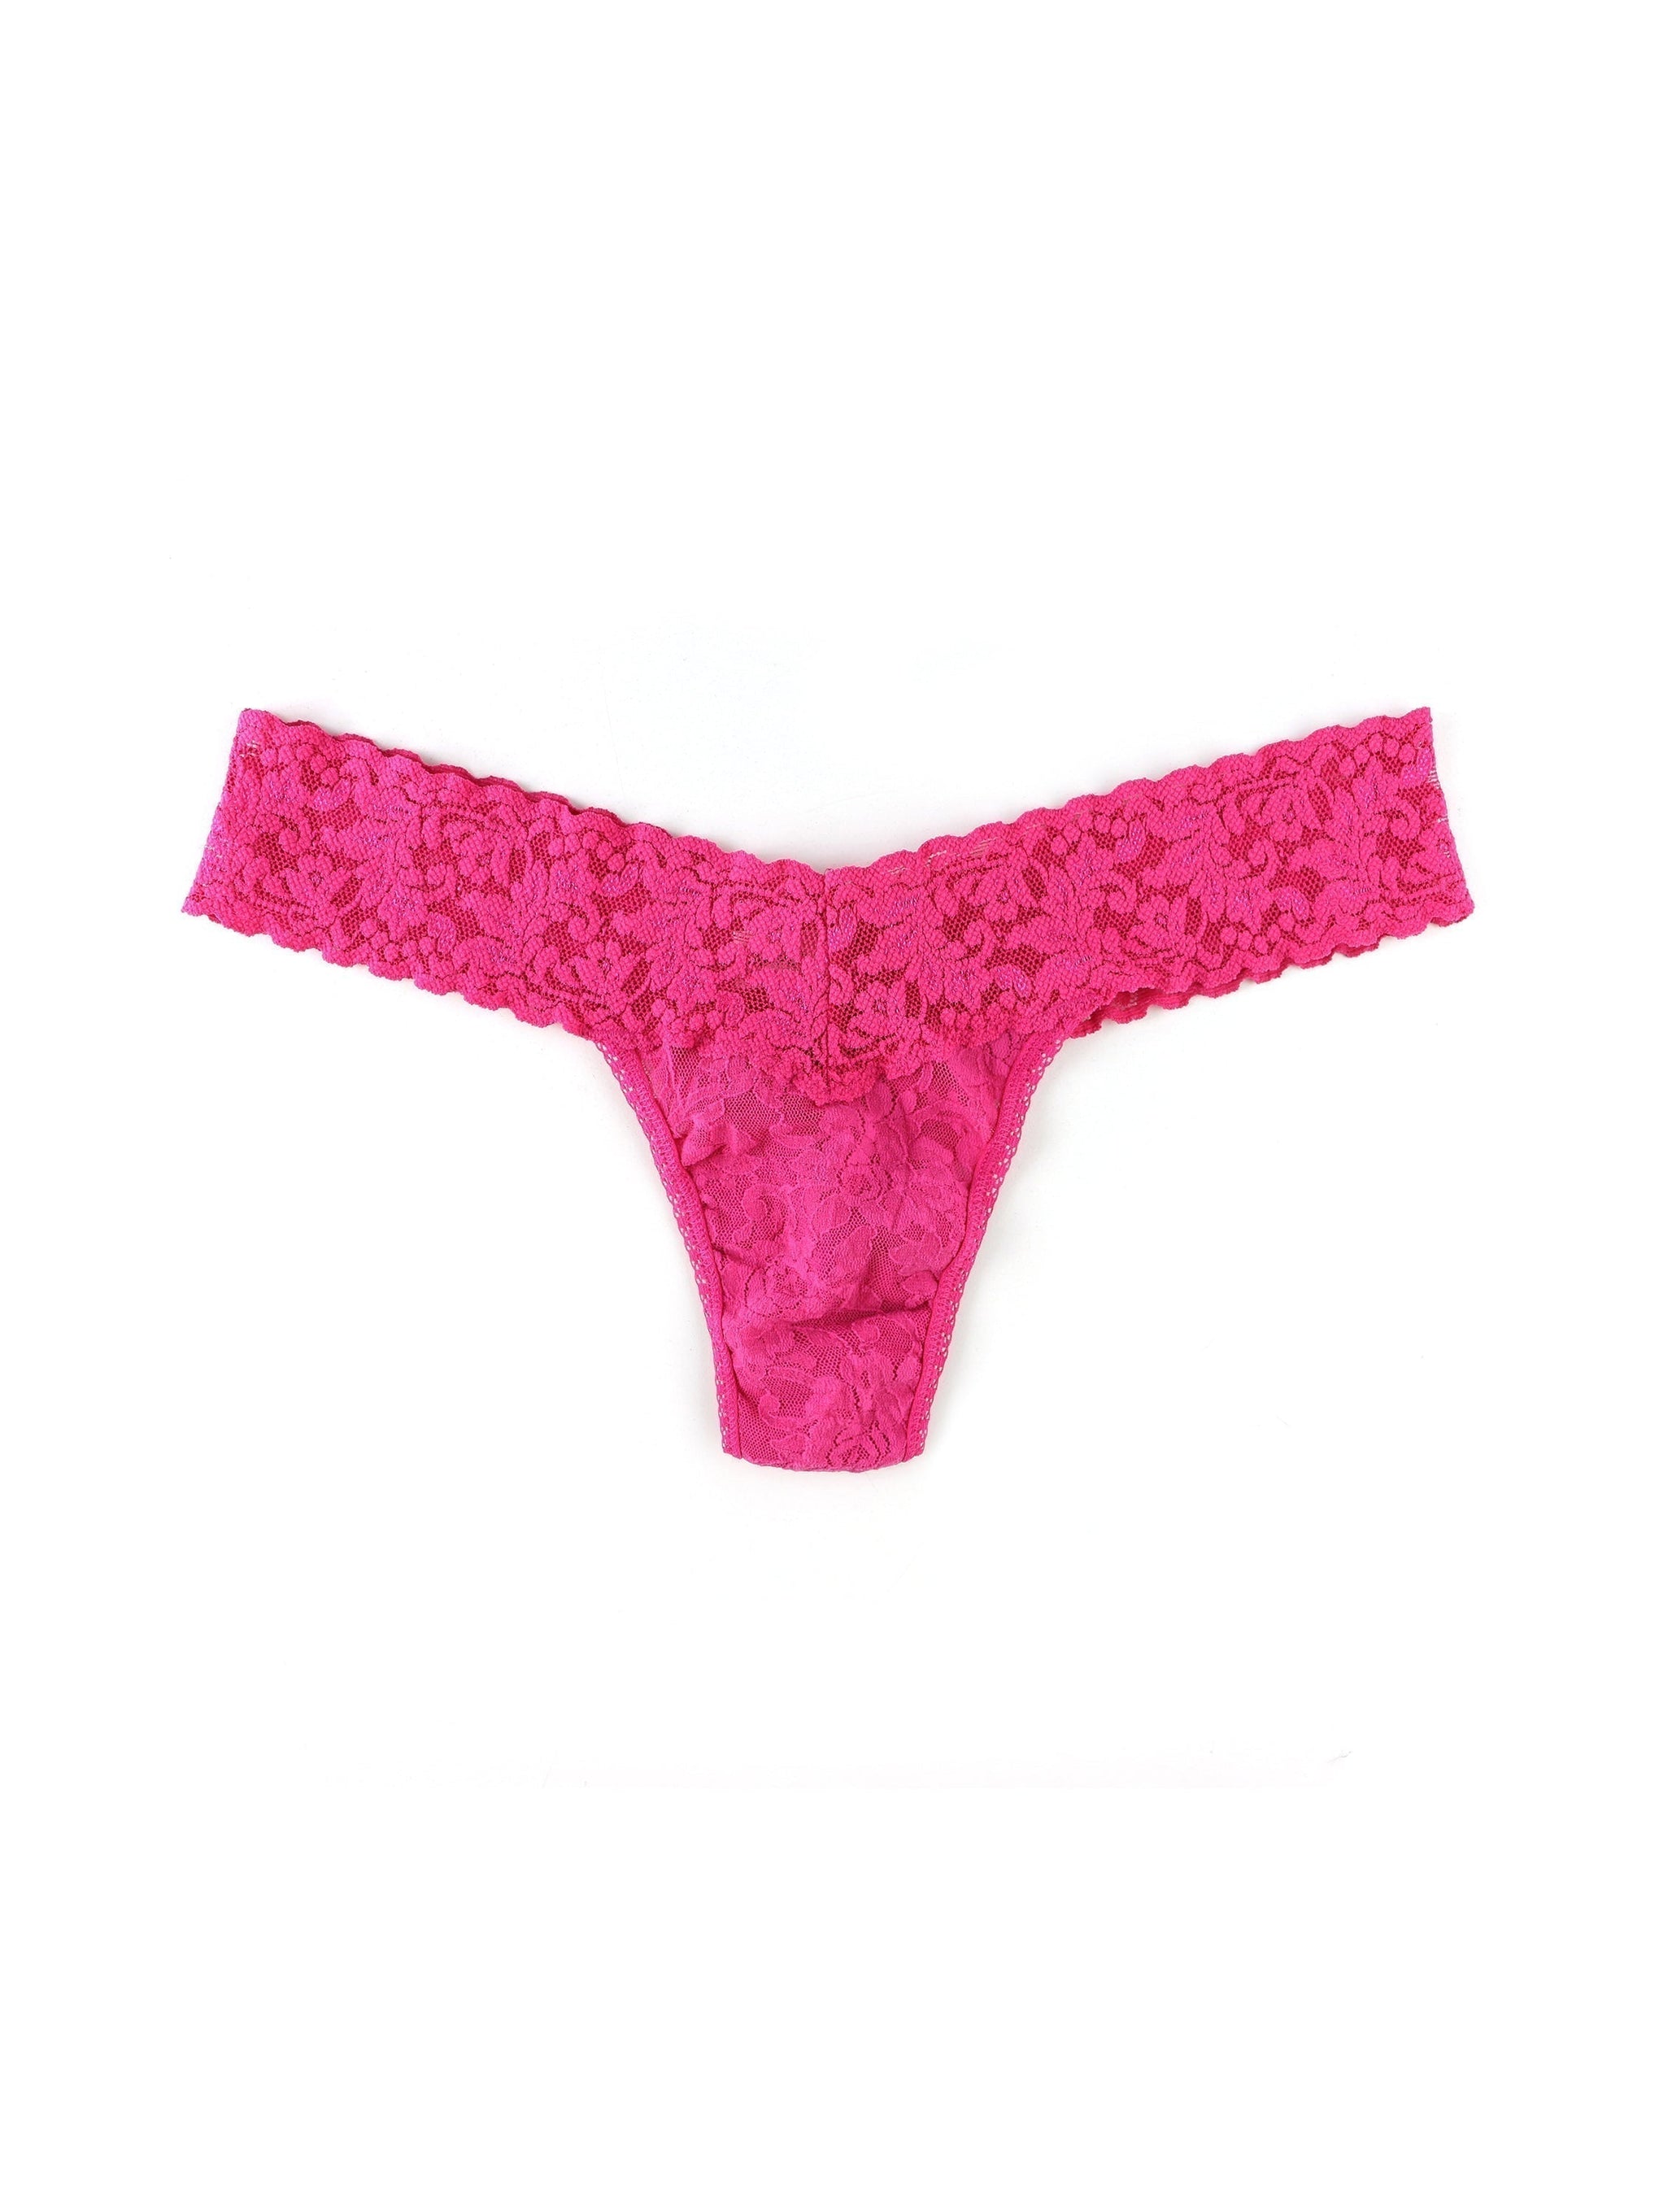 Hanky Panky 259668 Women's Petite Lace Thong Venetian Pink Underwear Size  OS